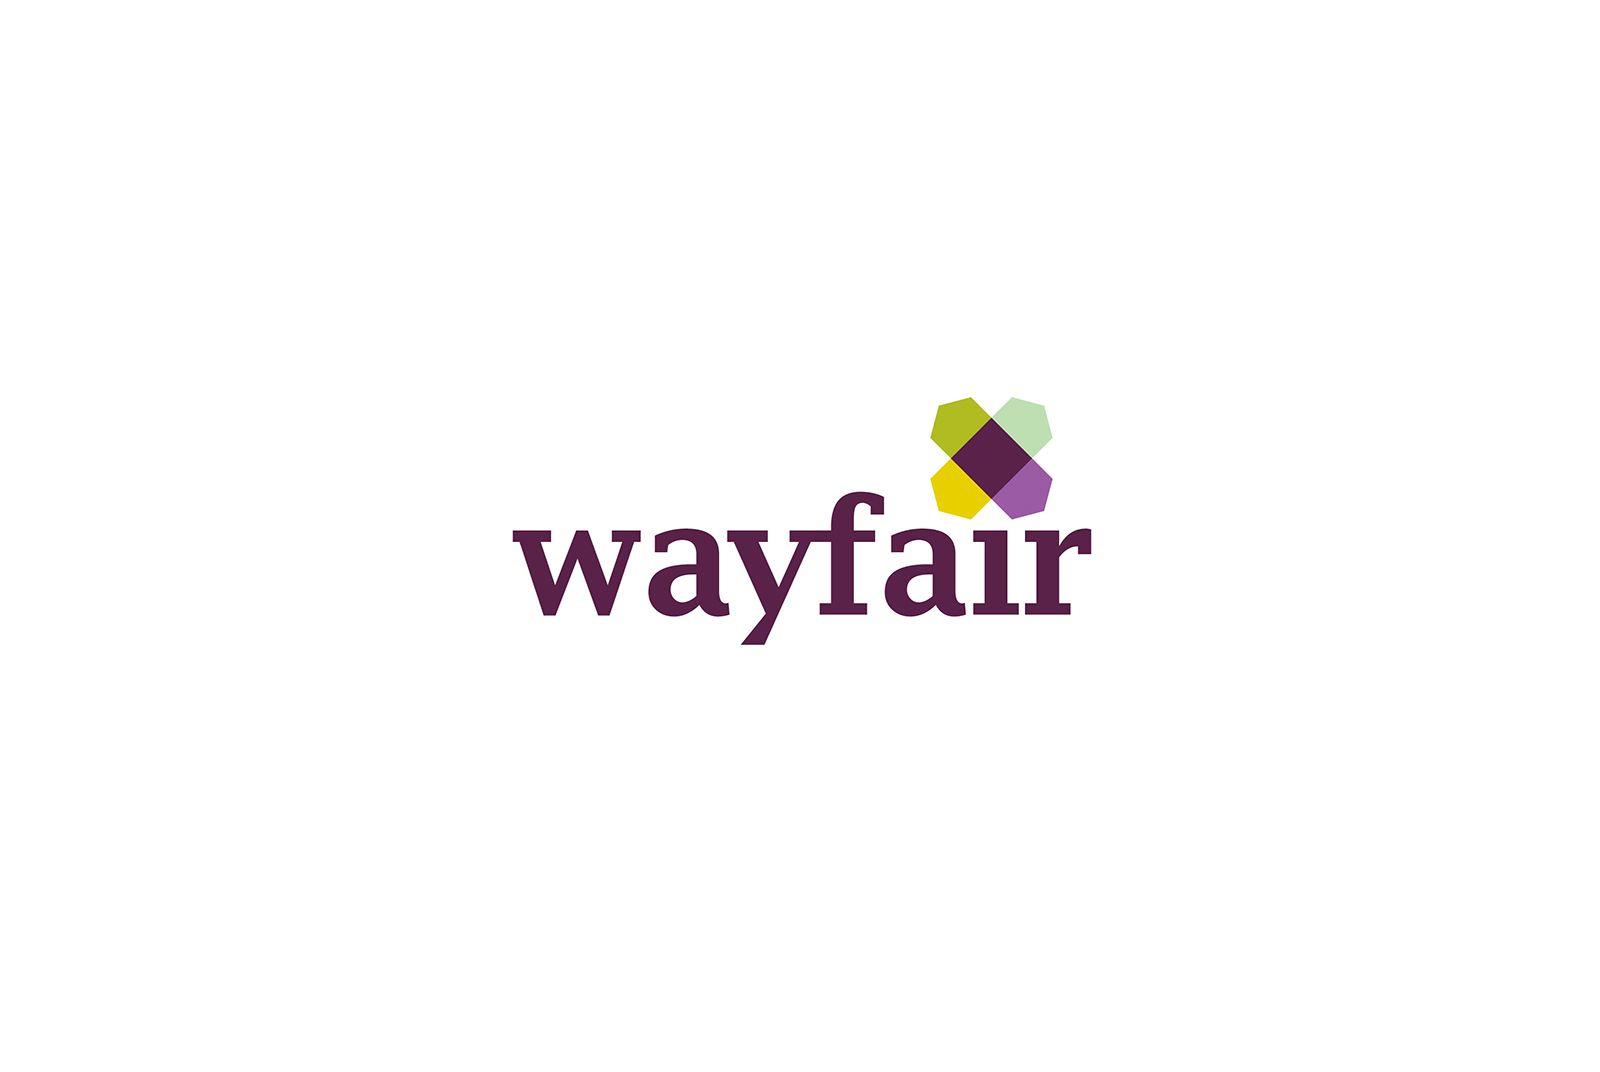 Wayfair Company Logo - Wayfair - M Space Design